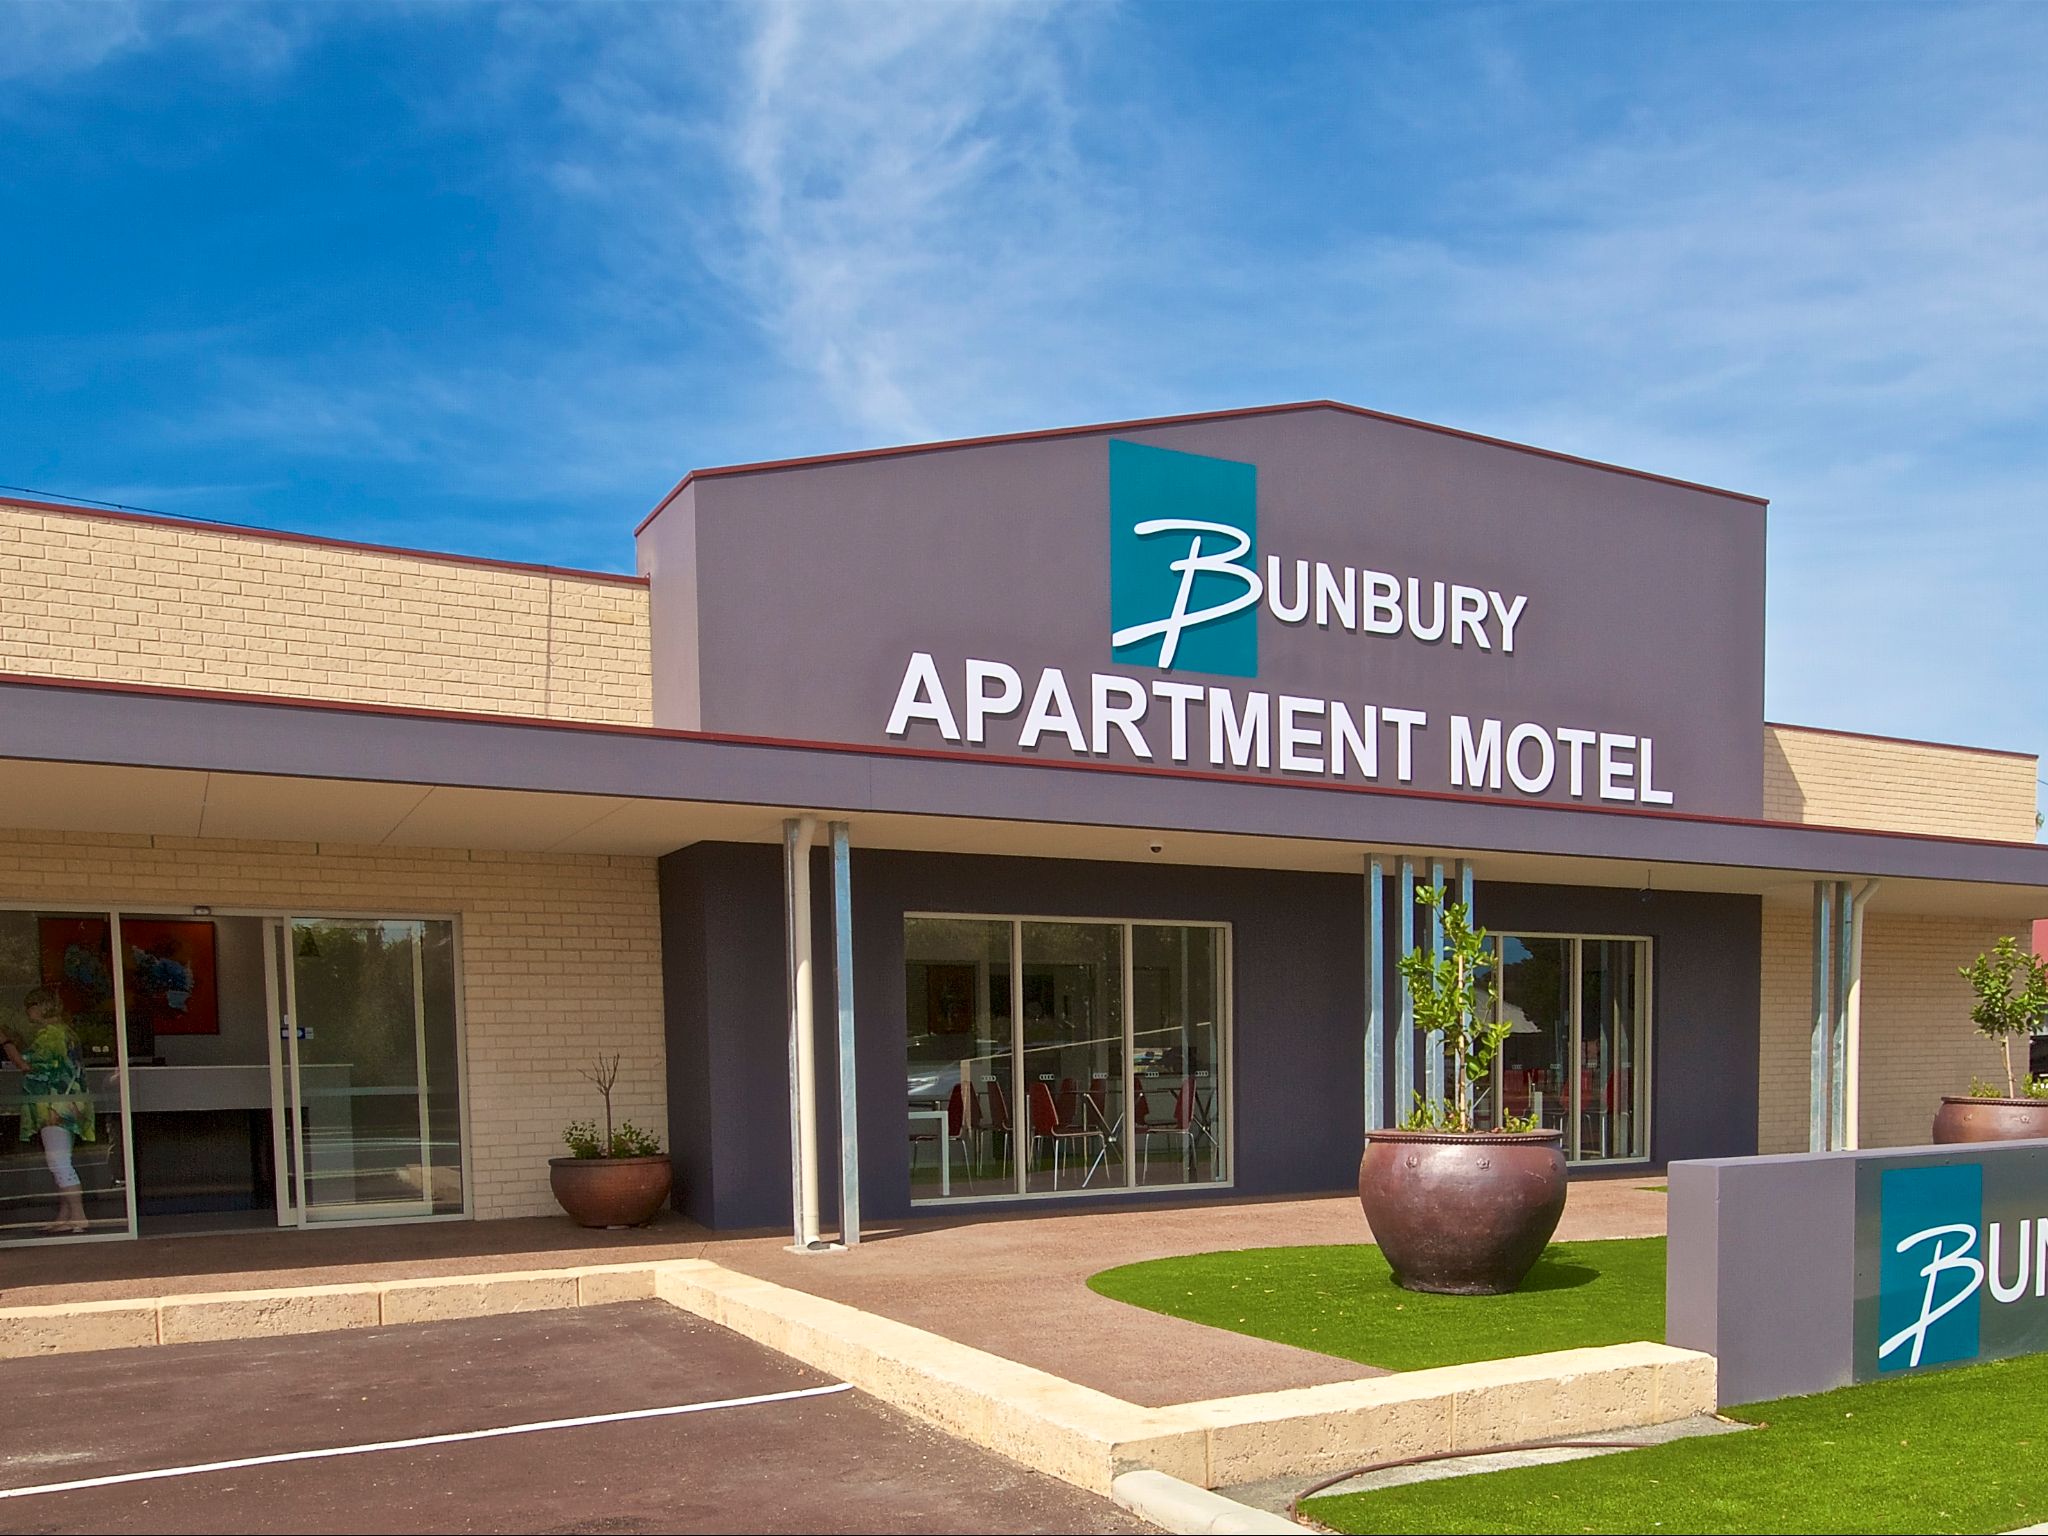 Bunbury Apartment Motel image 1